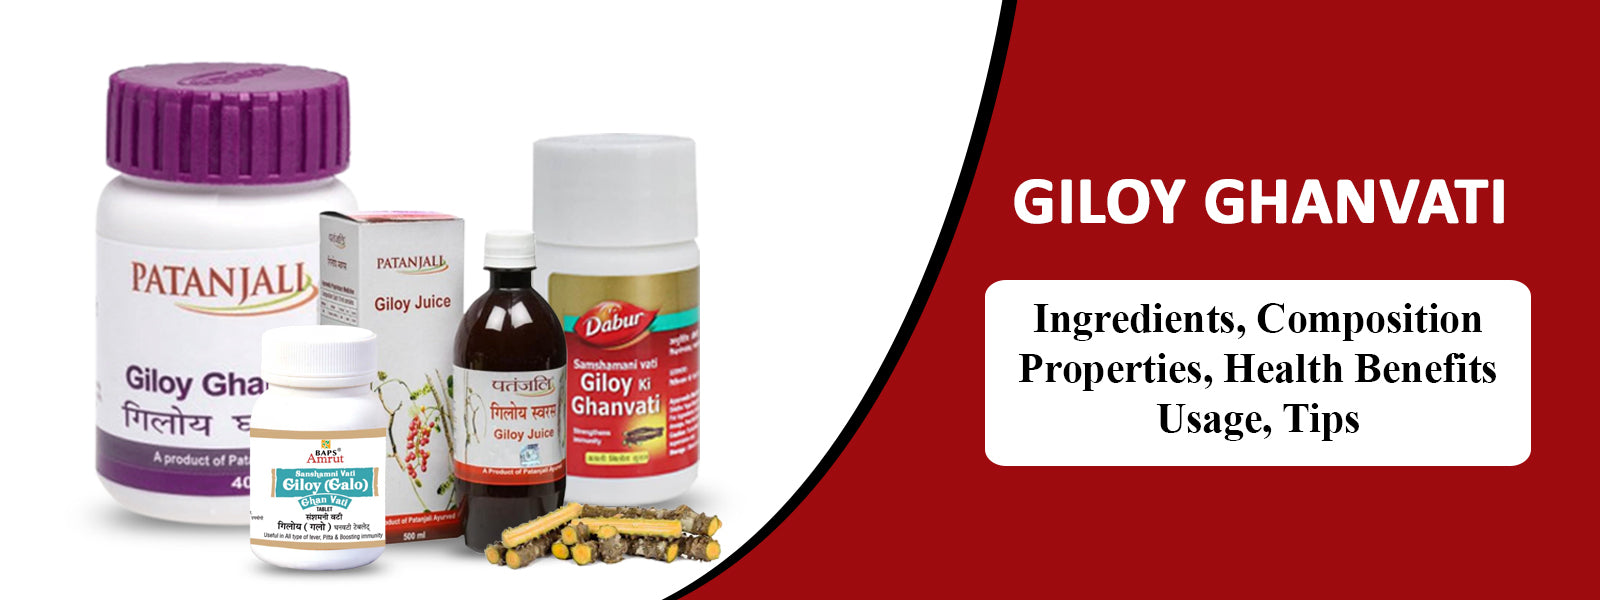 Giloy Ghan Vati -  Ingredients, Composition, Health Benefits, Usage, Dosage